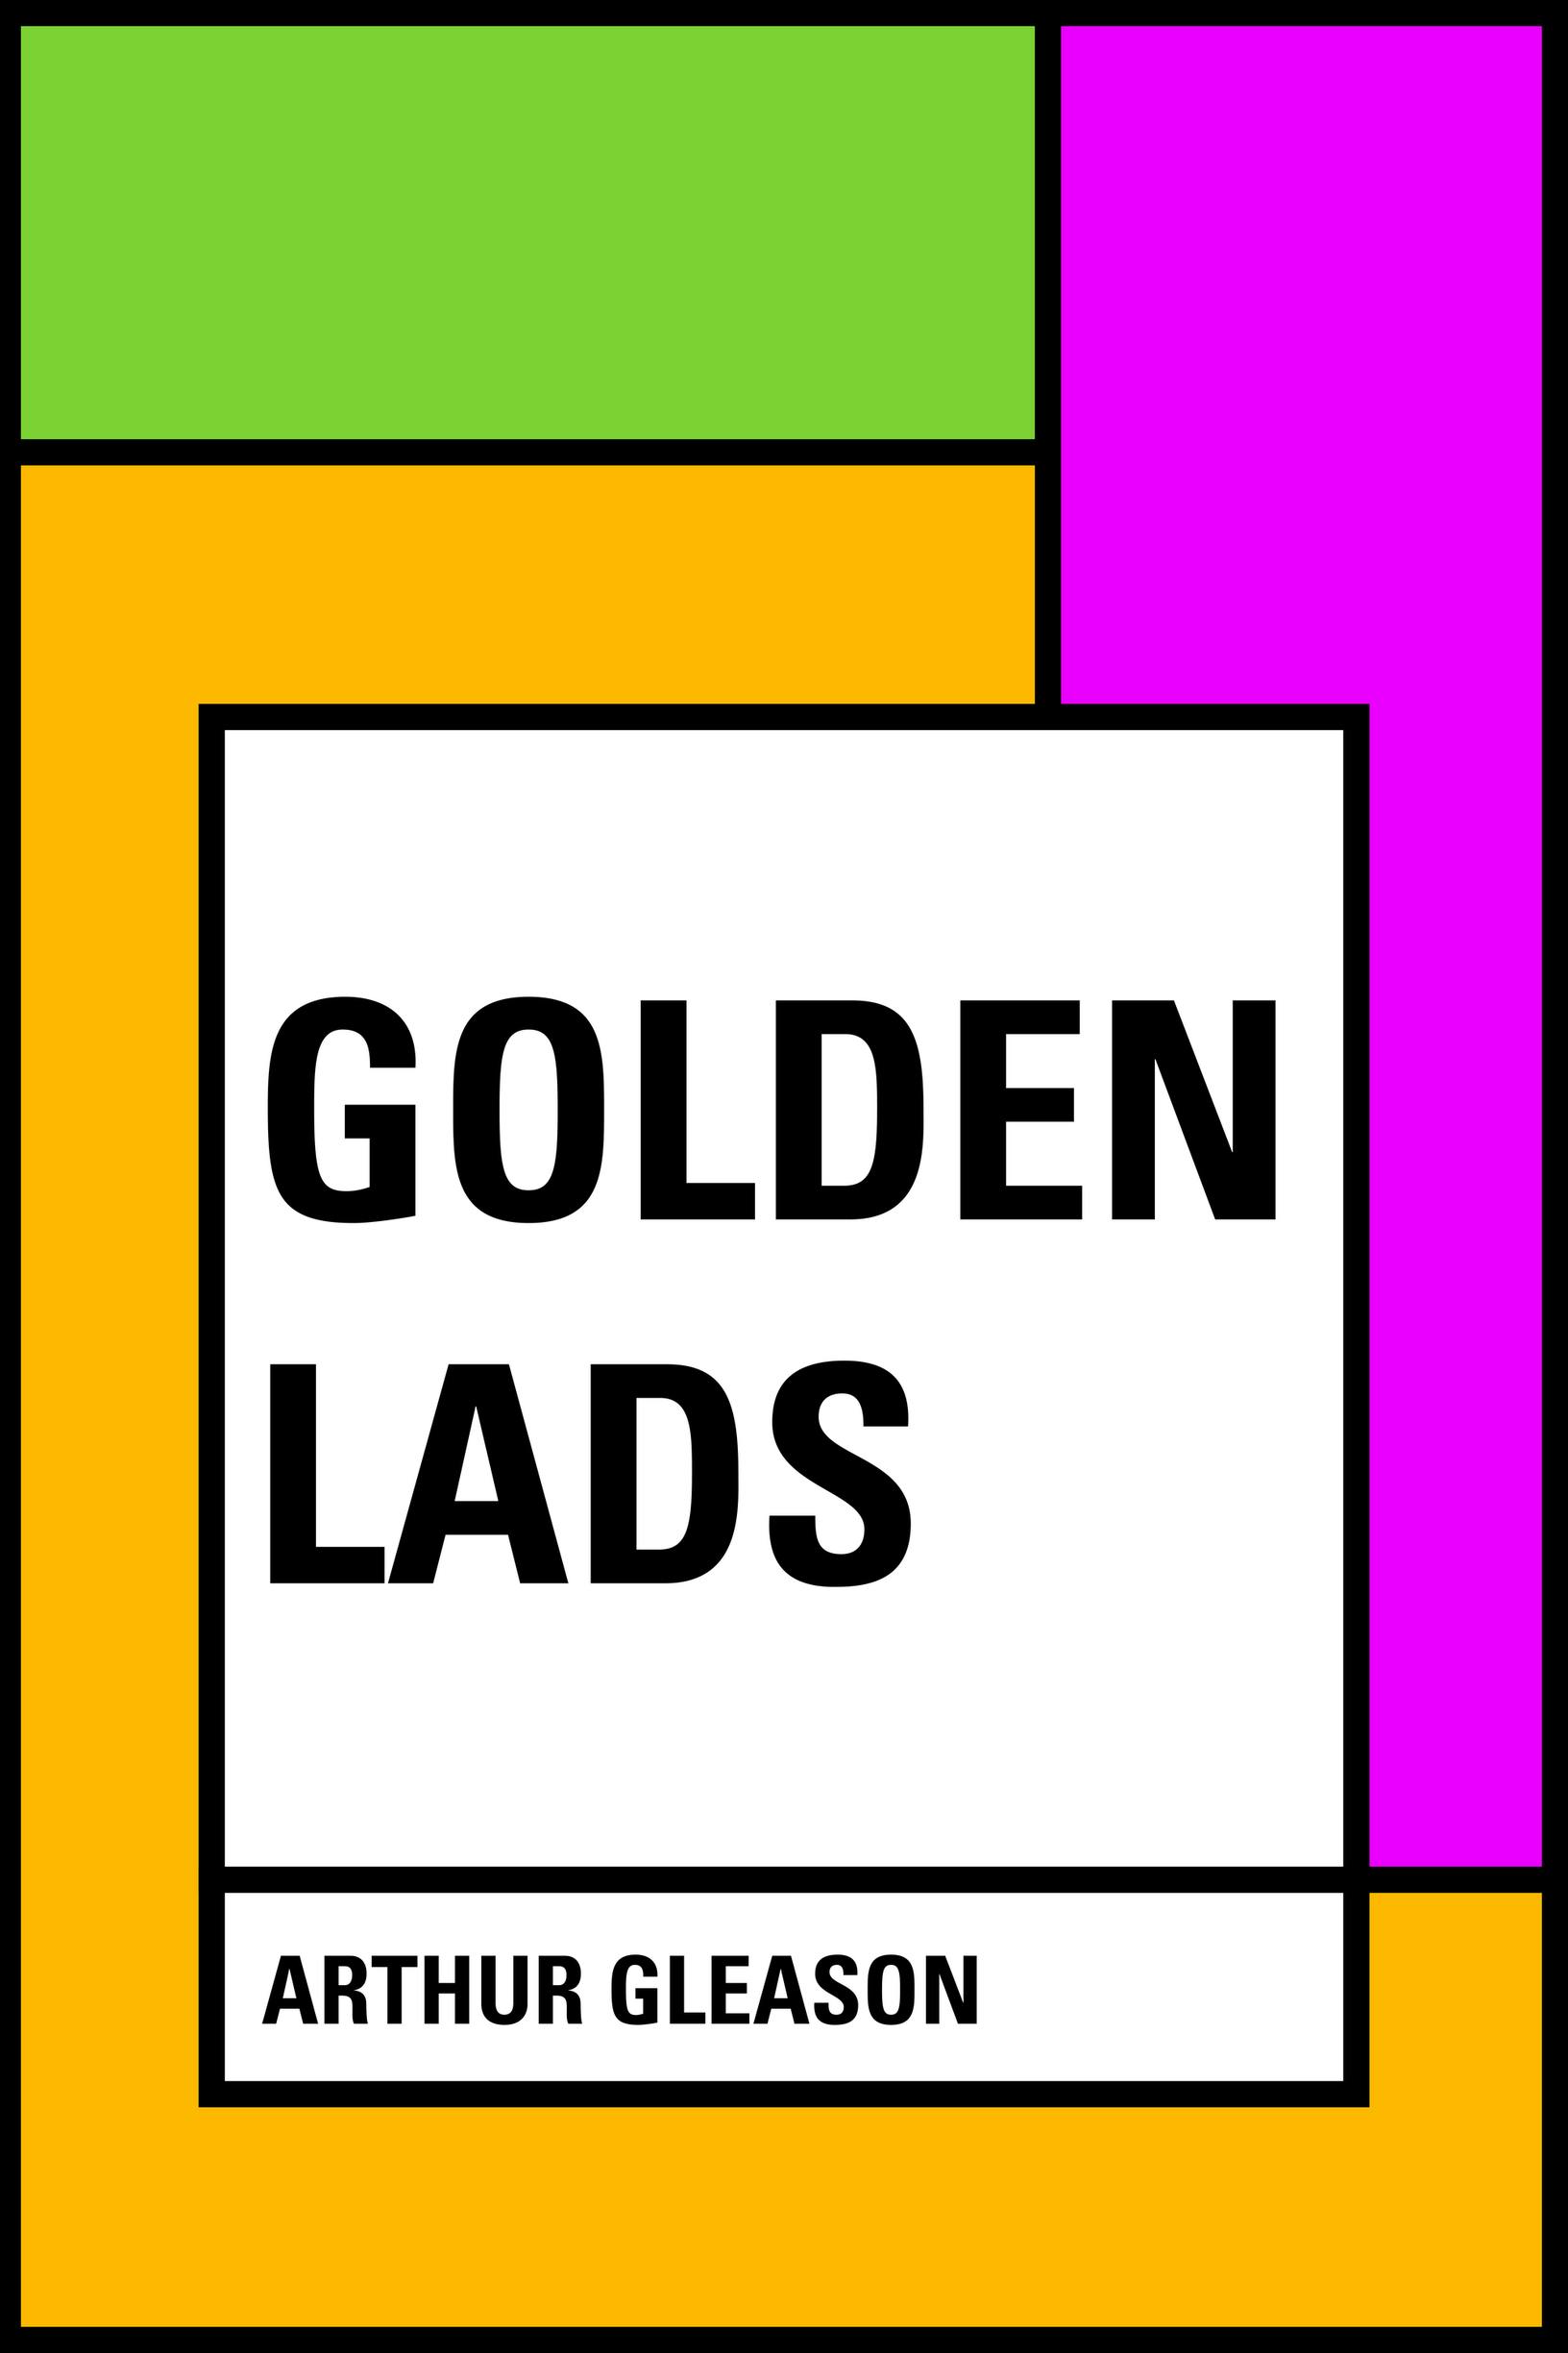 Golden Lads - Arthur Gleason